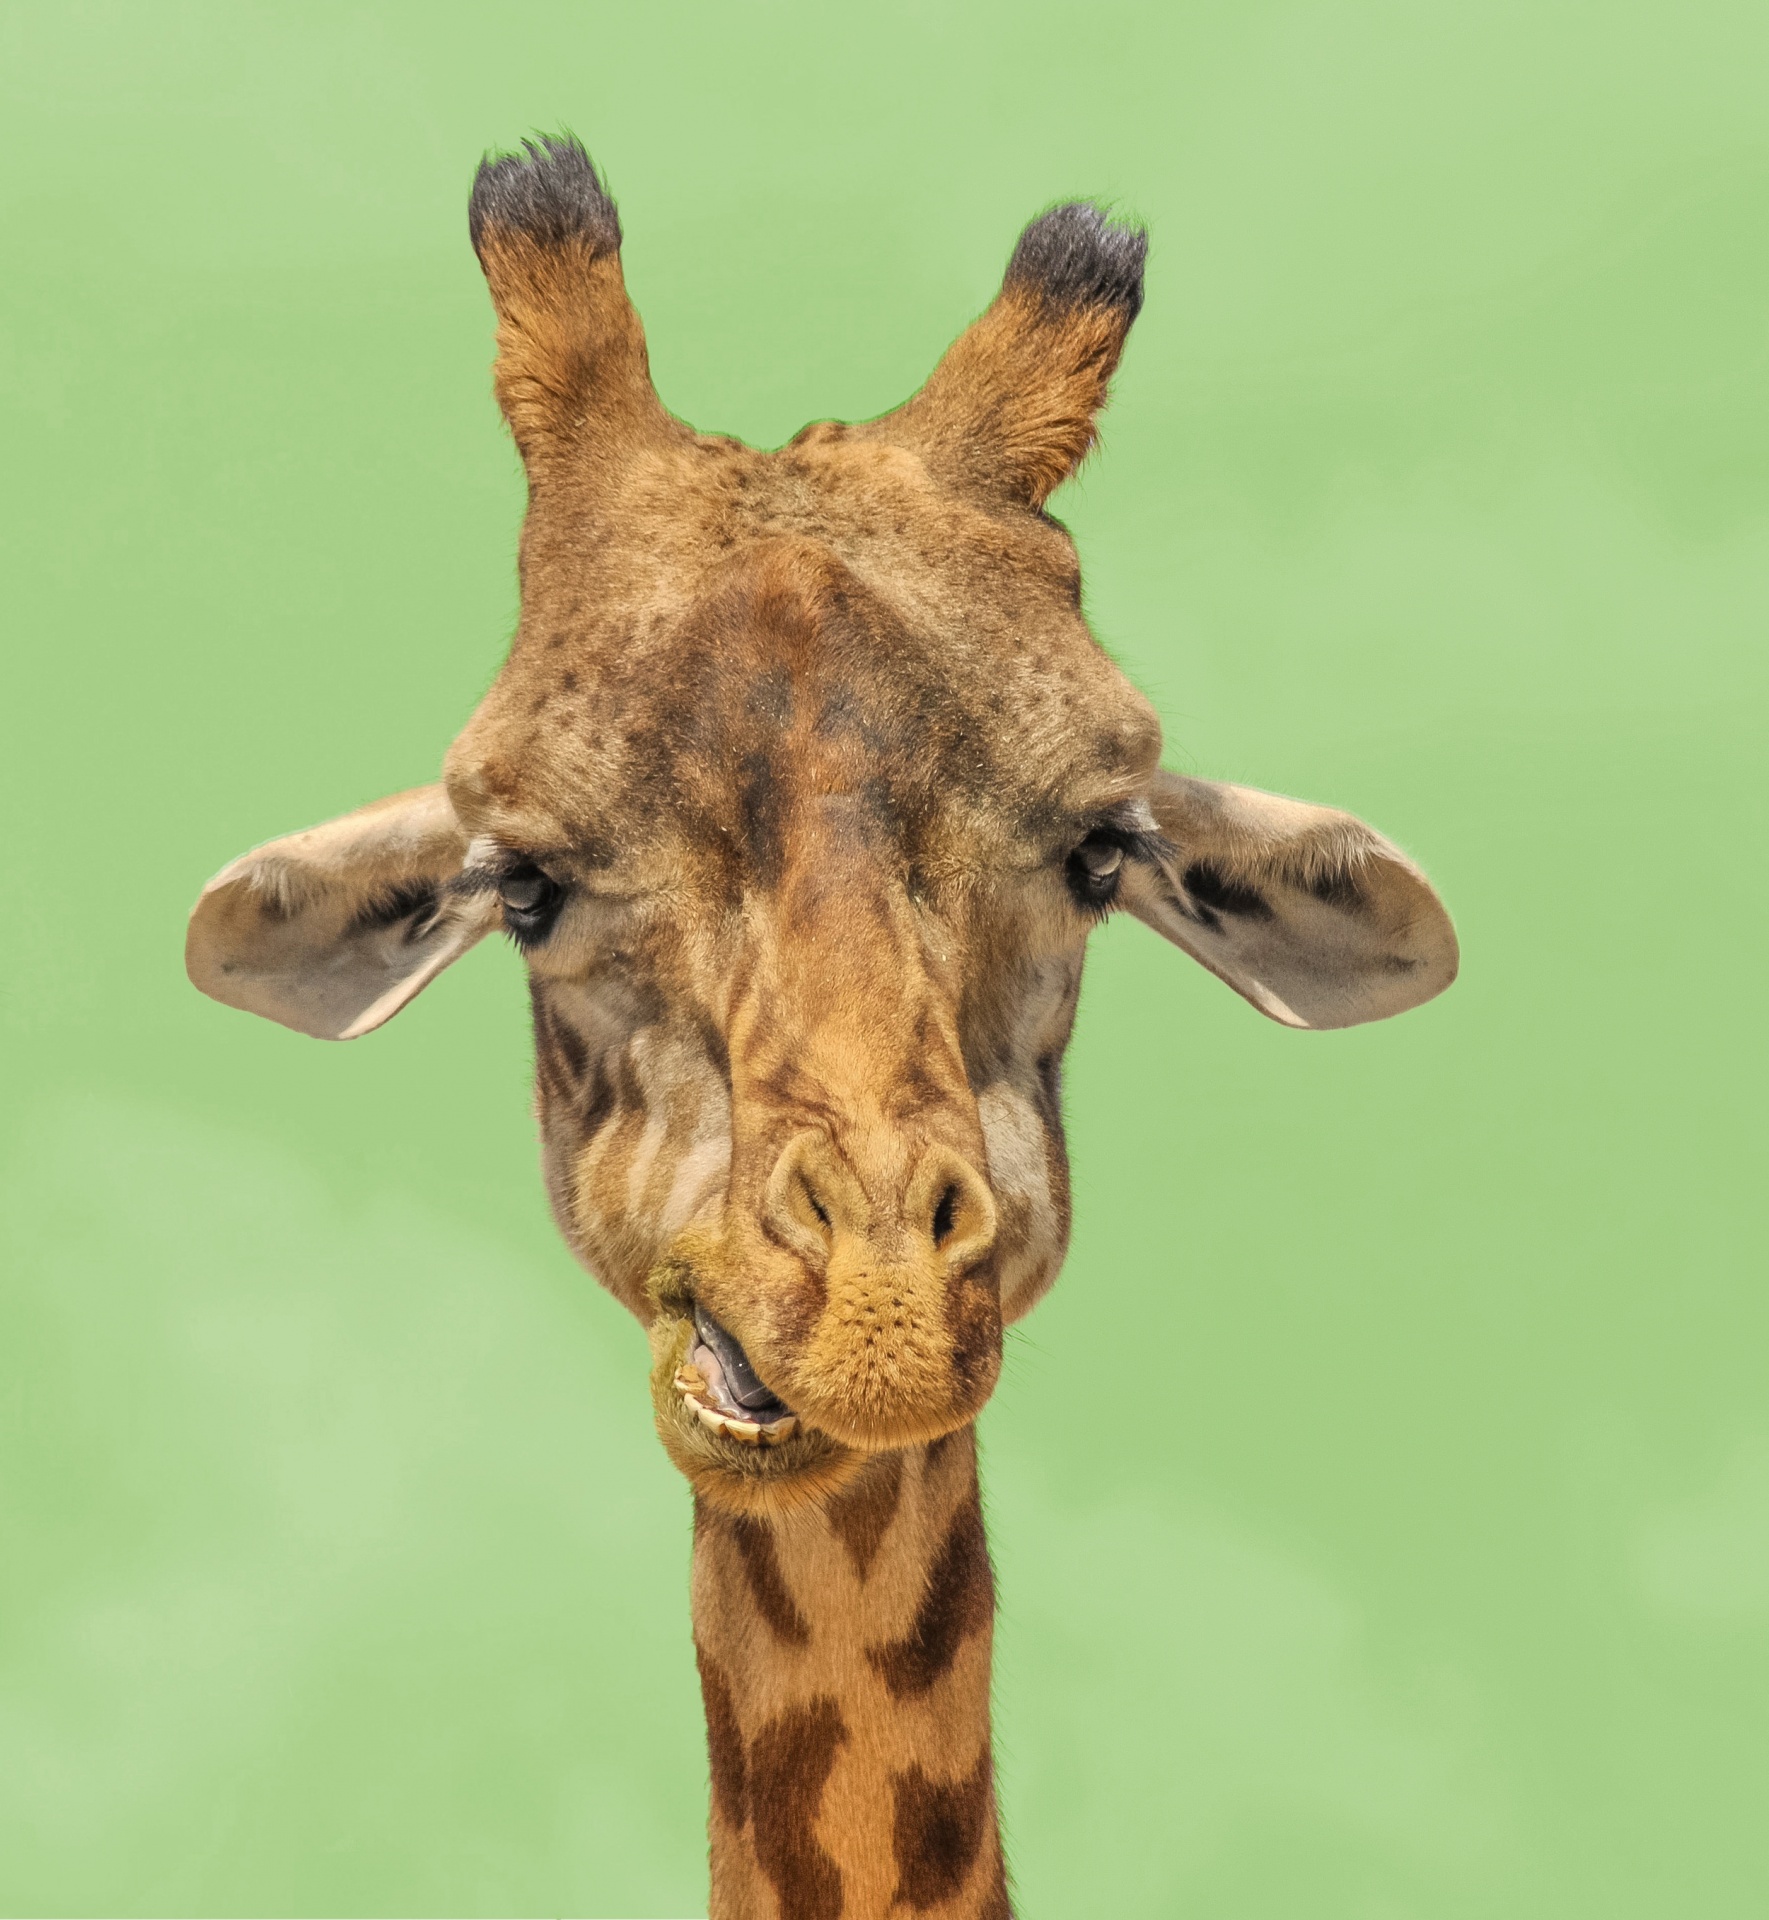 Funny portrait of giraffe face close-up